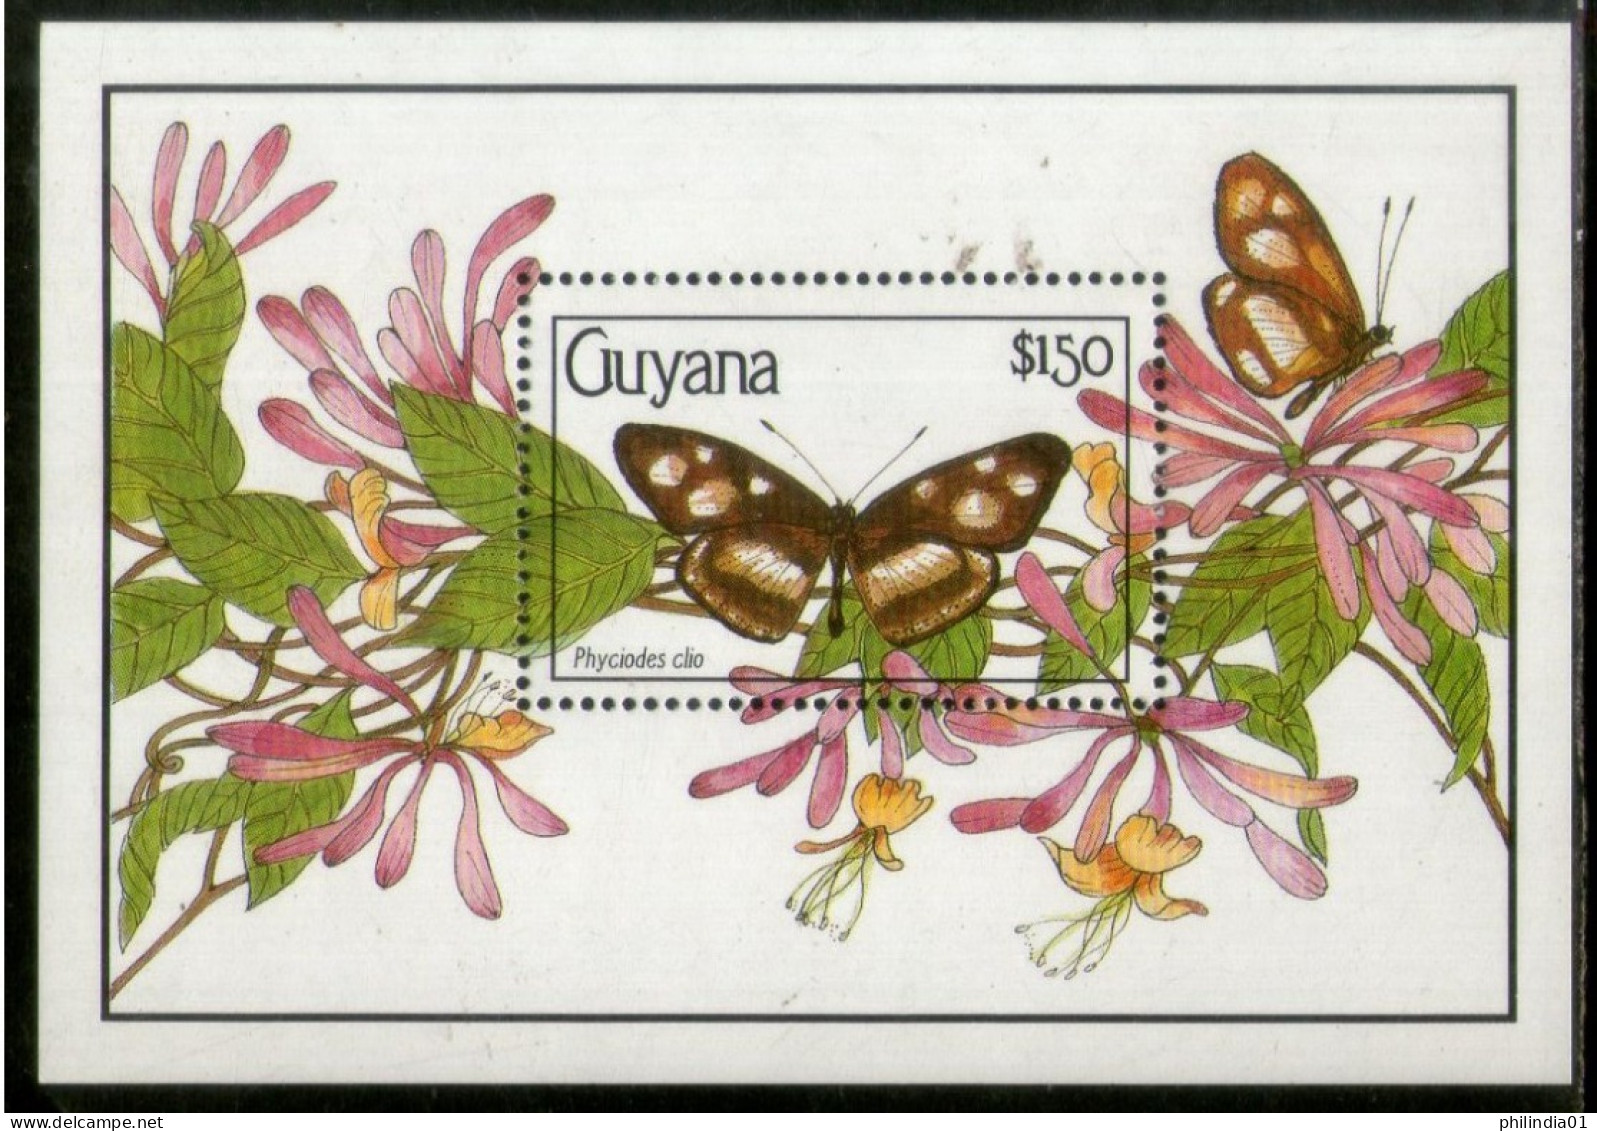 Guyana 1990 Butterflies Moth Insect Sc 2345 M/s MNH # 1860 - Papillons